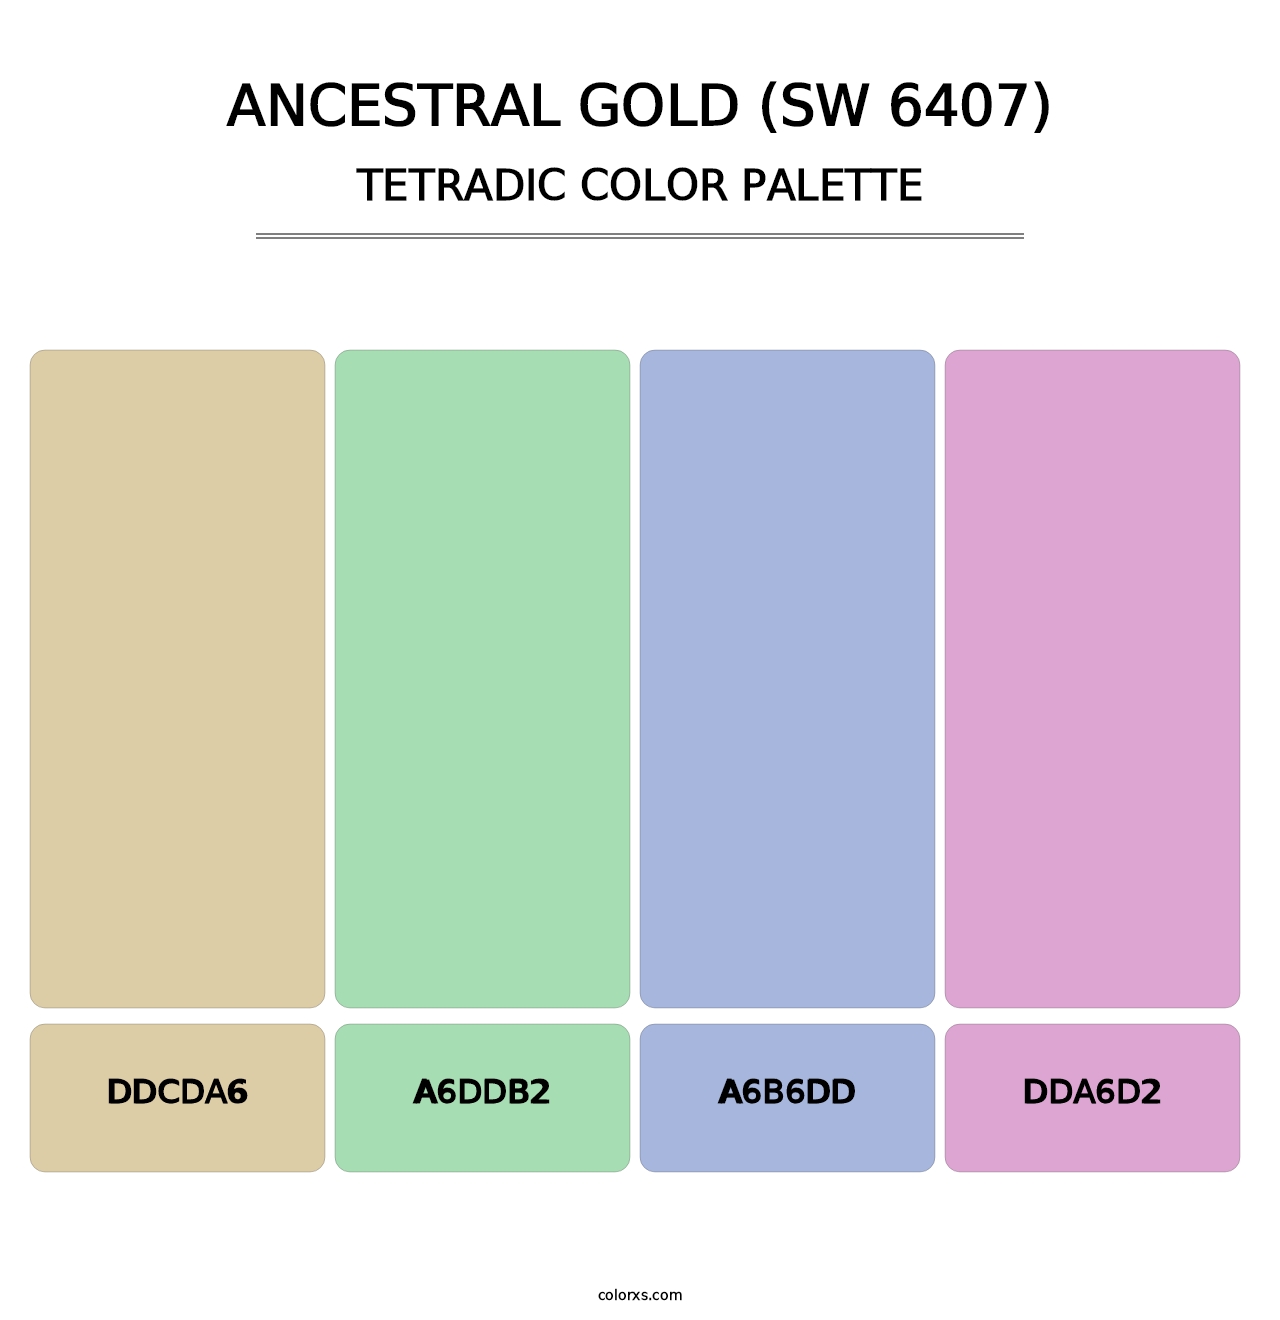 Ancestral Gold (SW 6407) - Tetradic Color Palette